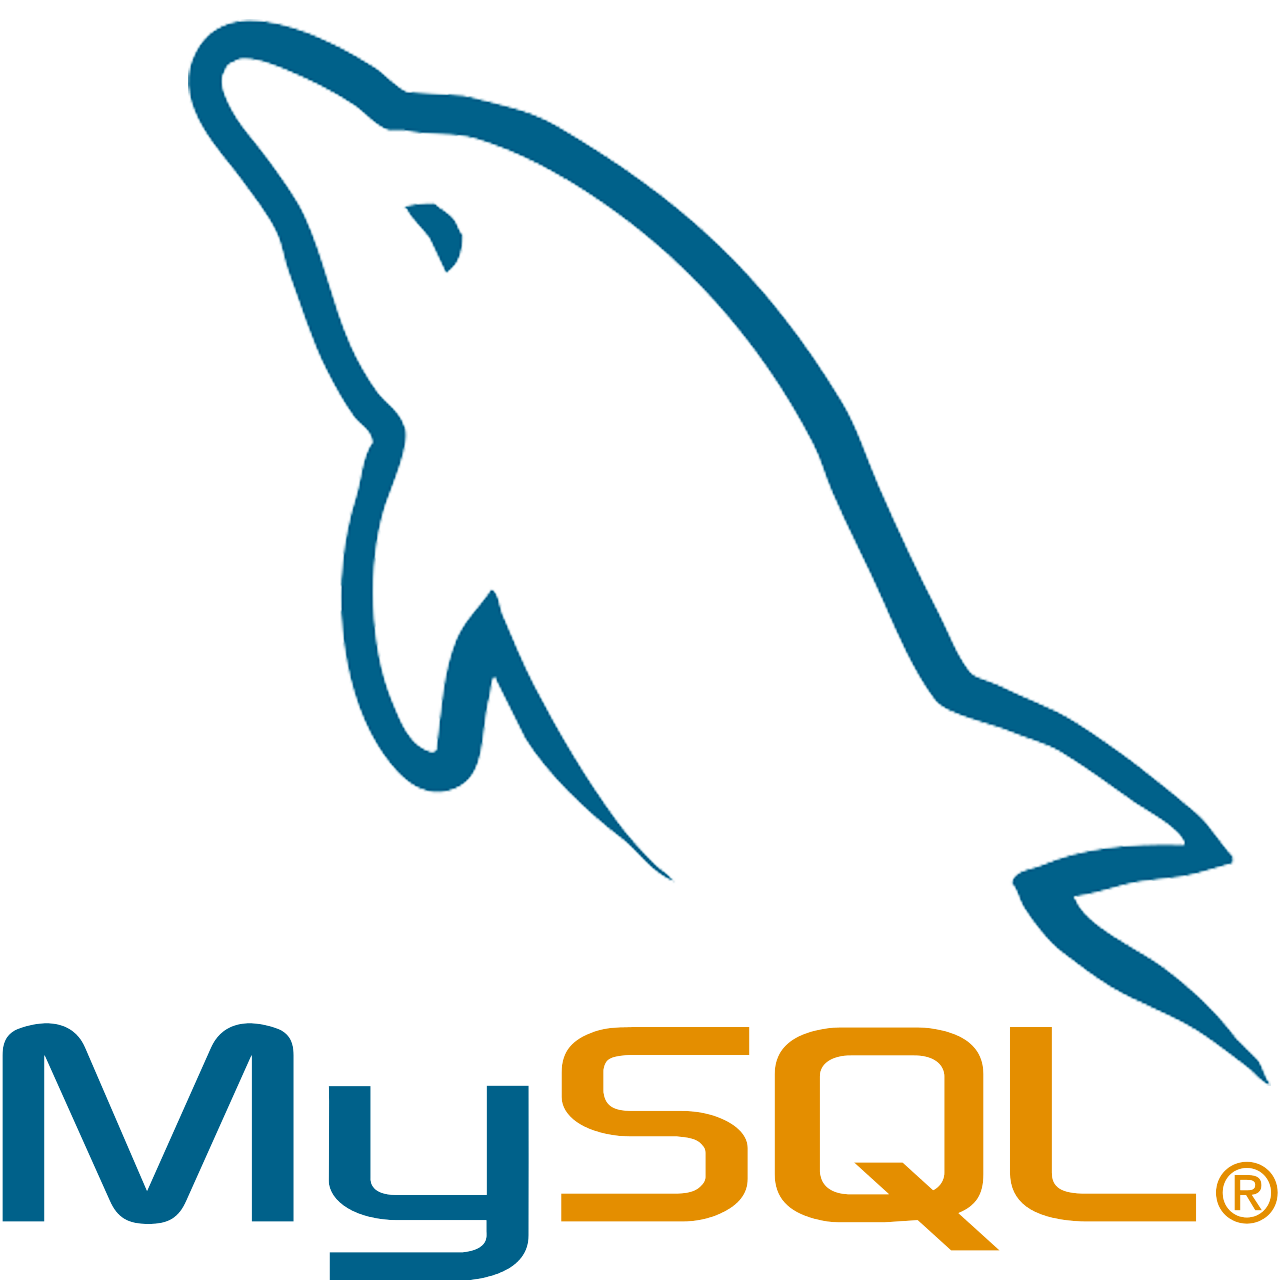 MySQL Development